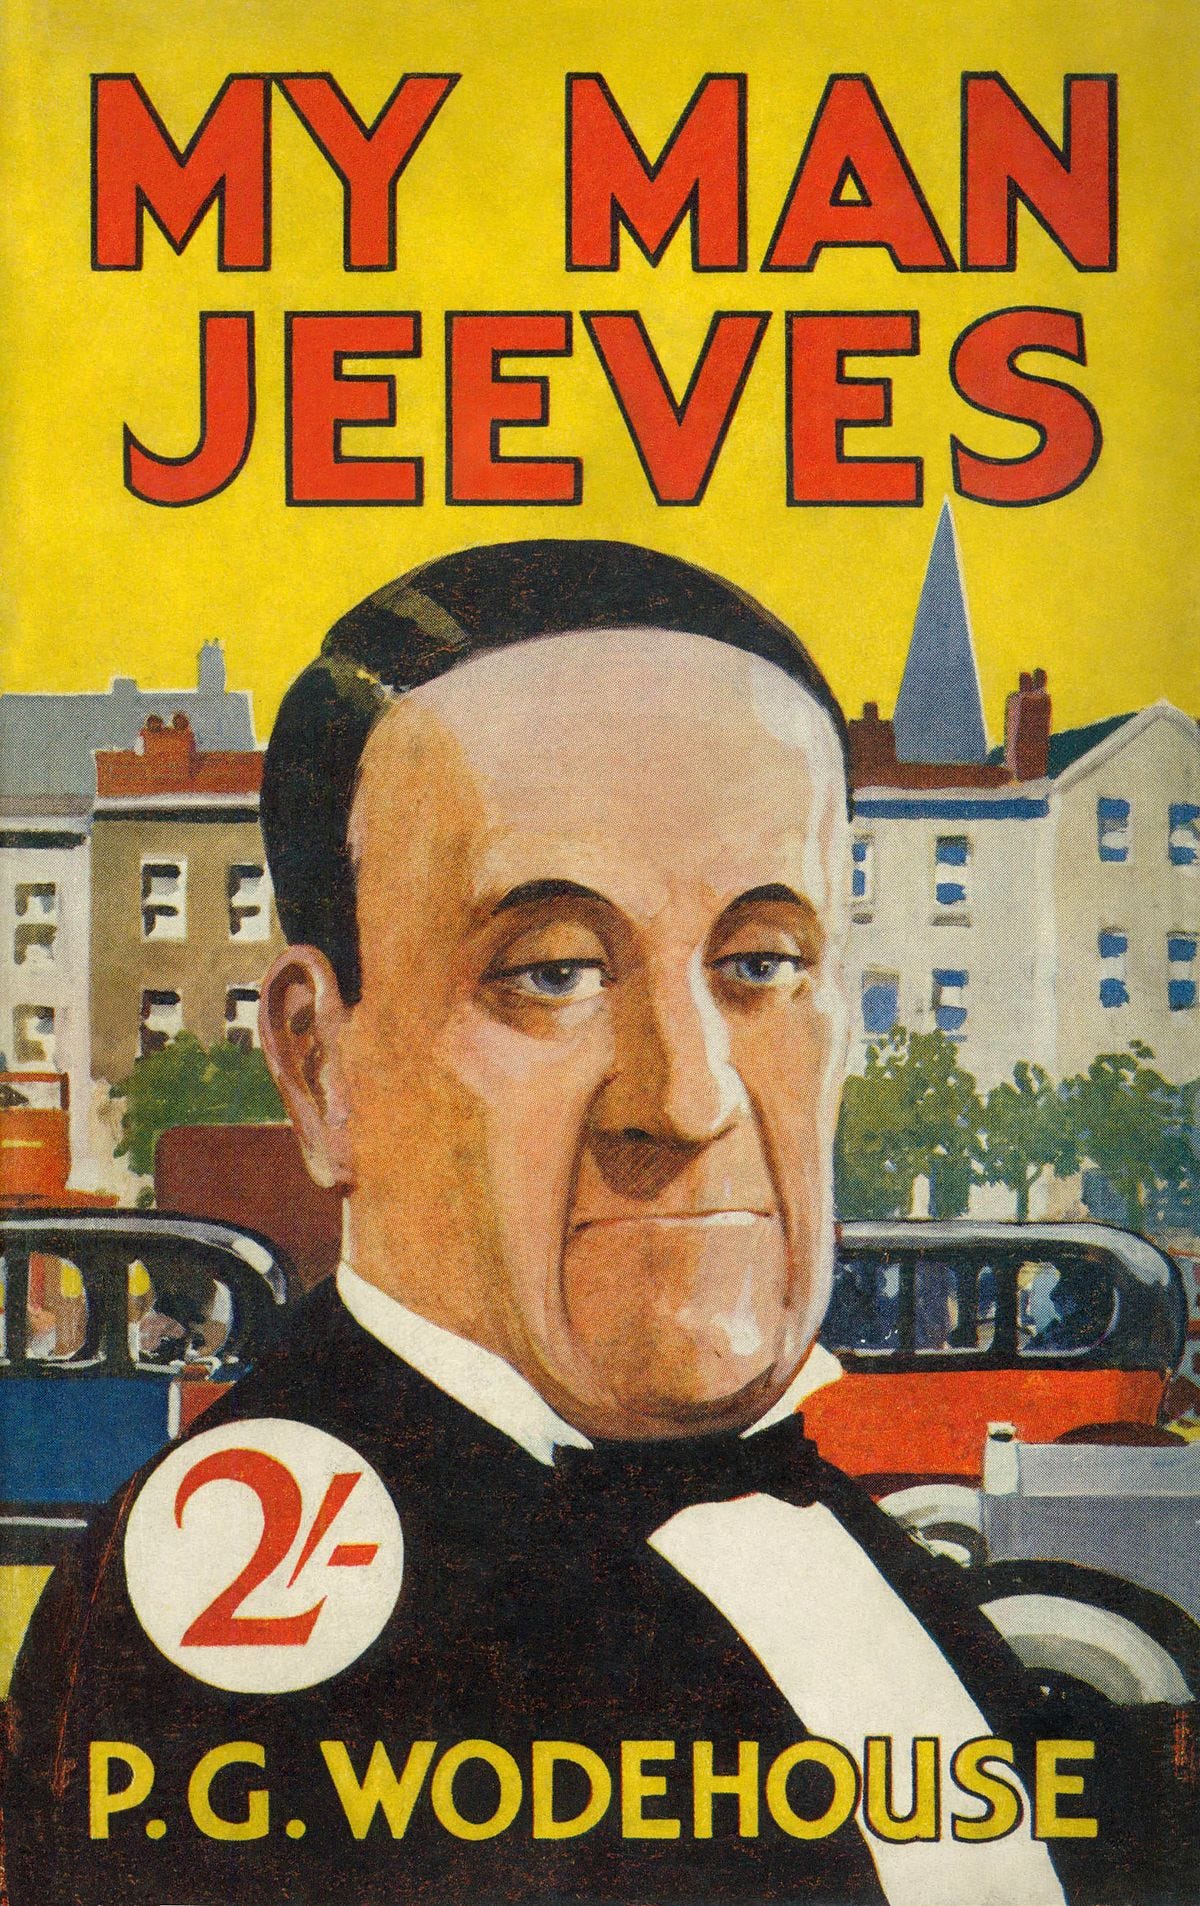 Jeeves - Wikipedia